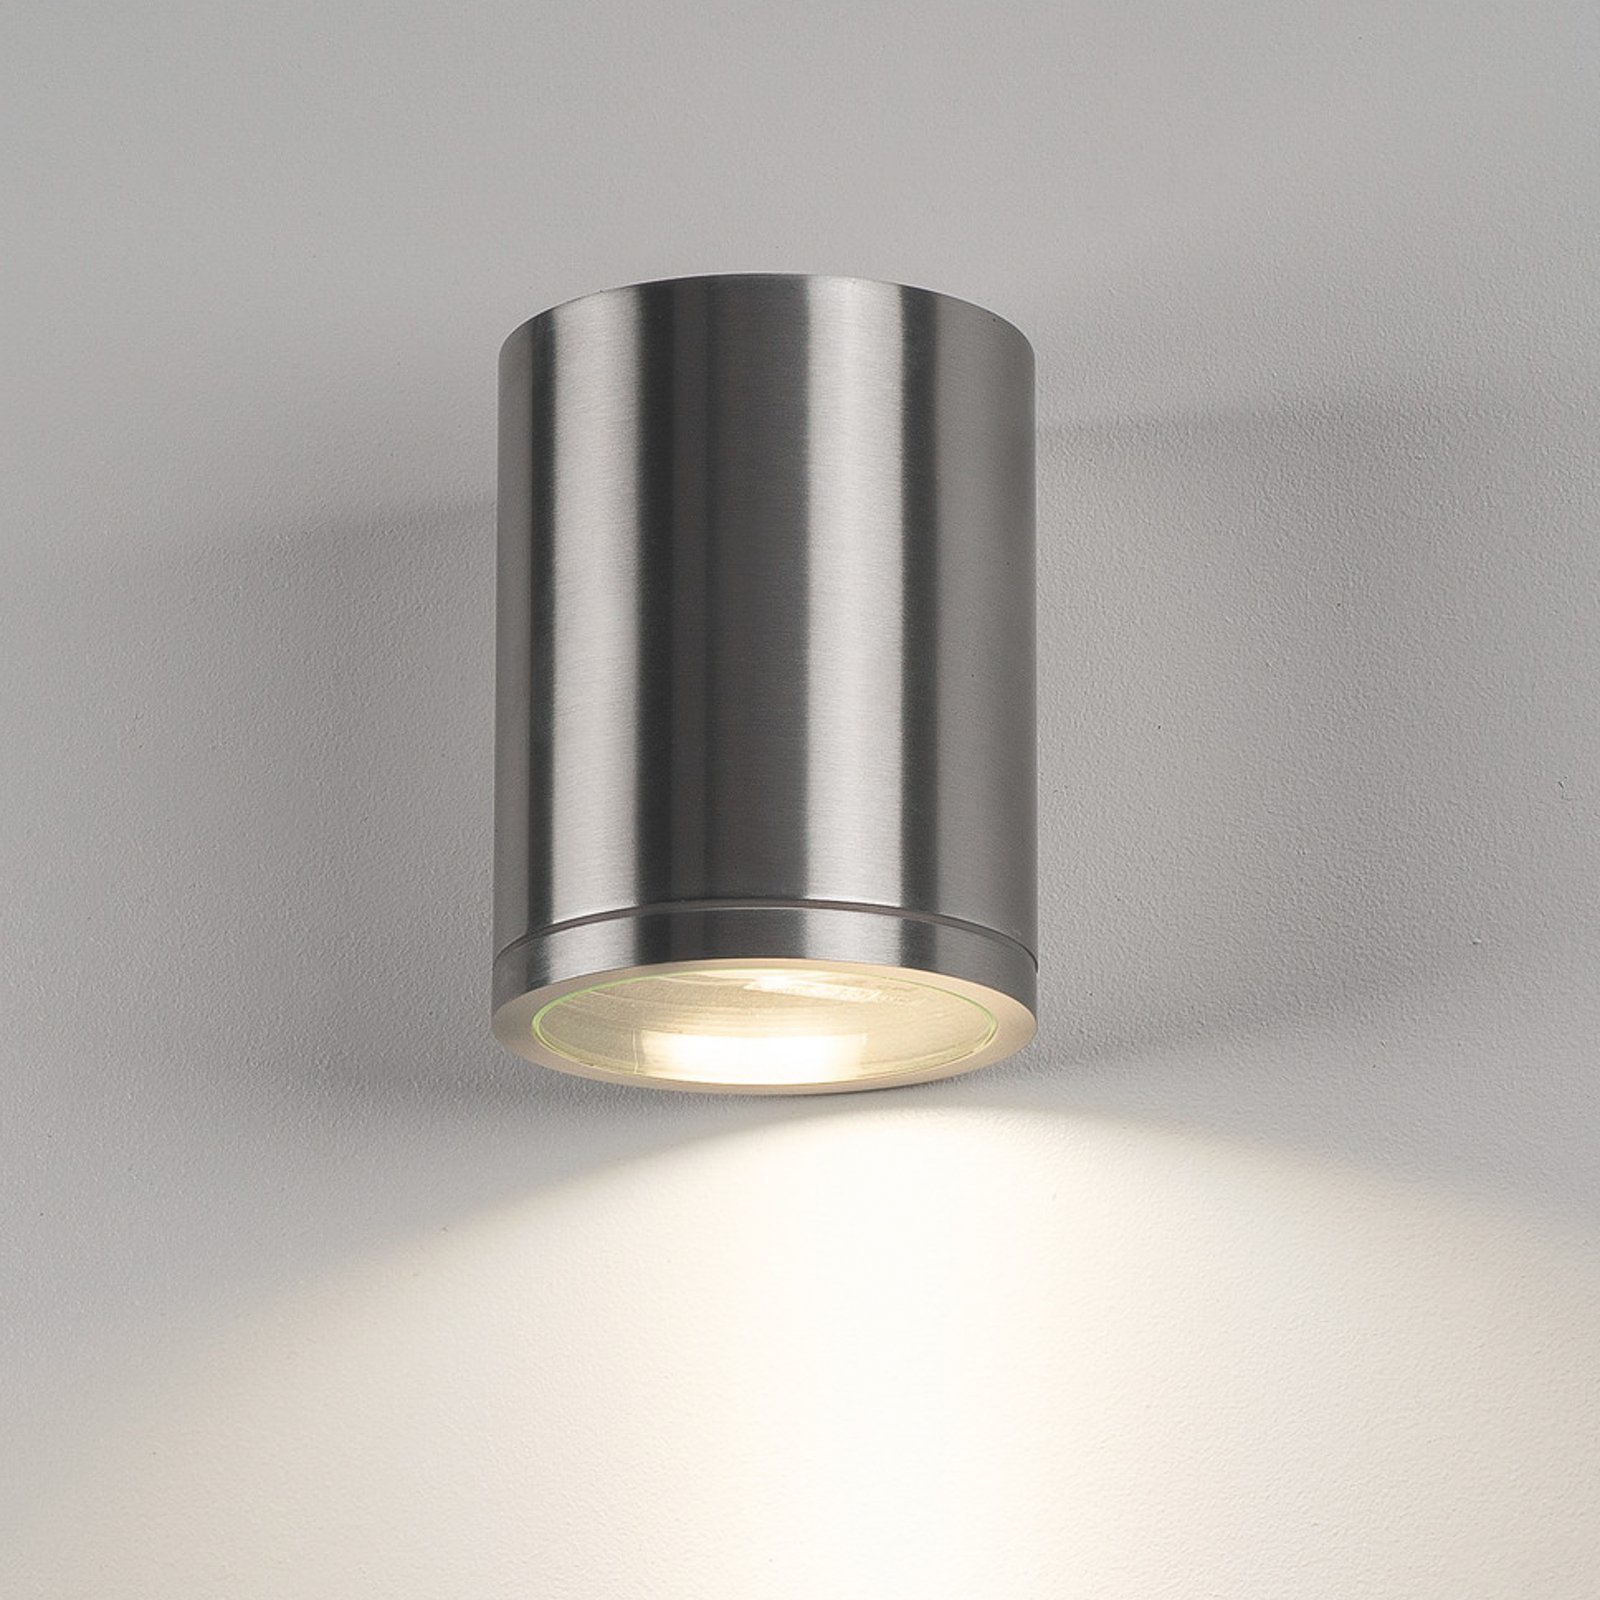 SLV Außenwandlampe Rox, alu gebürstet, Aluminium, Ø 12,5 cm